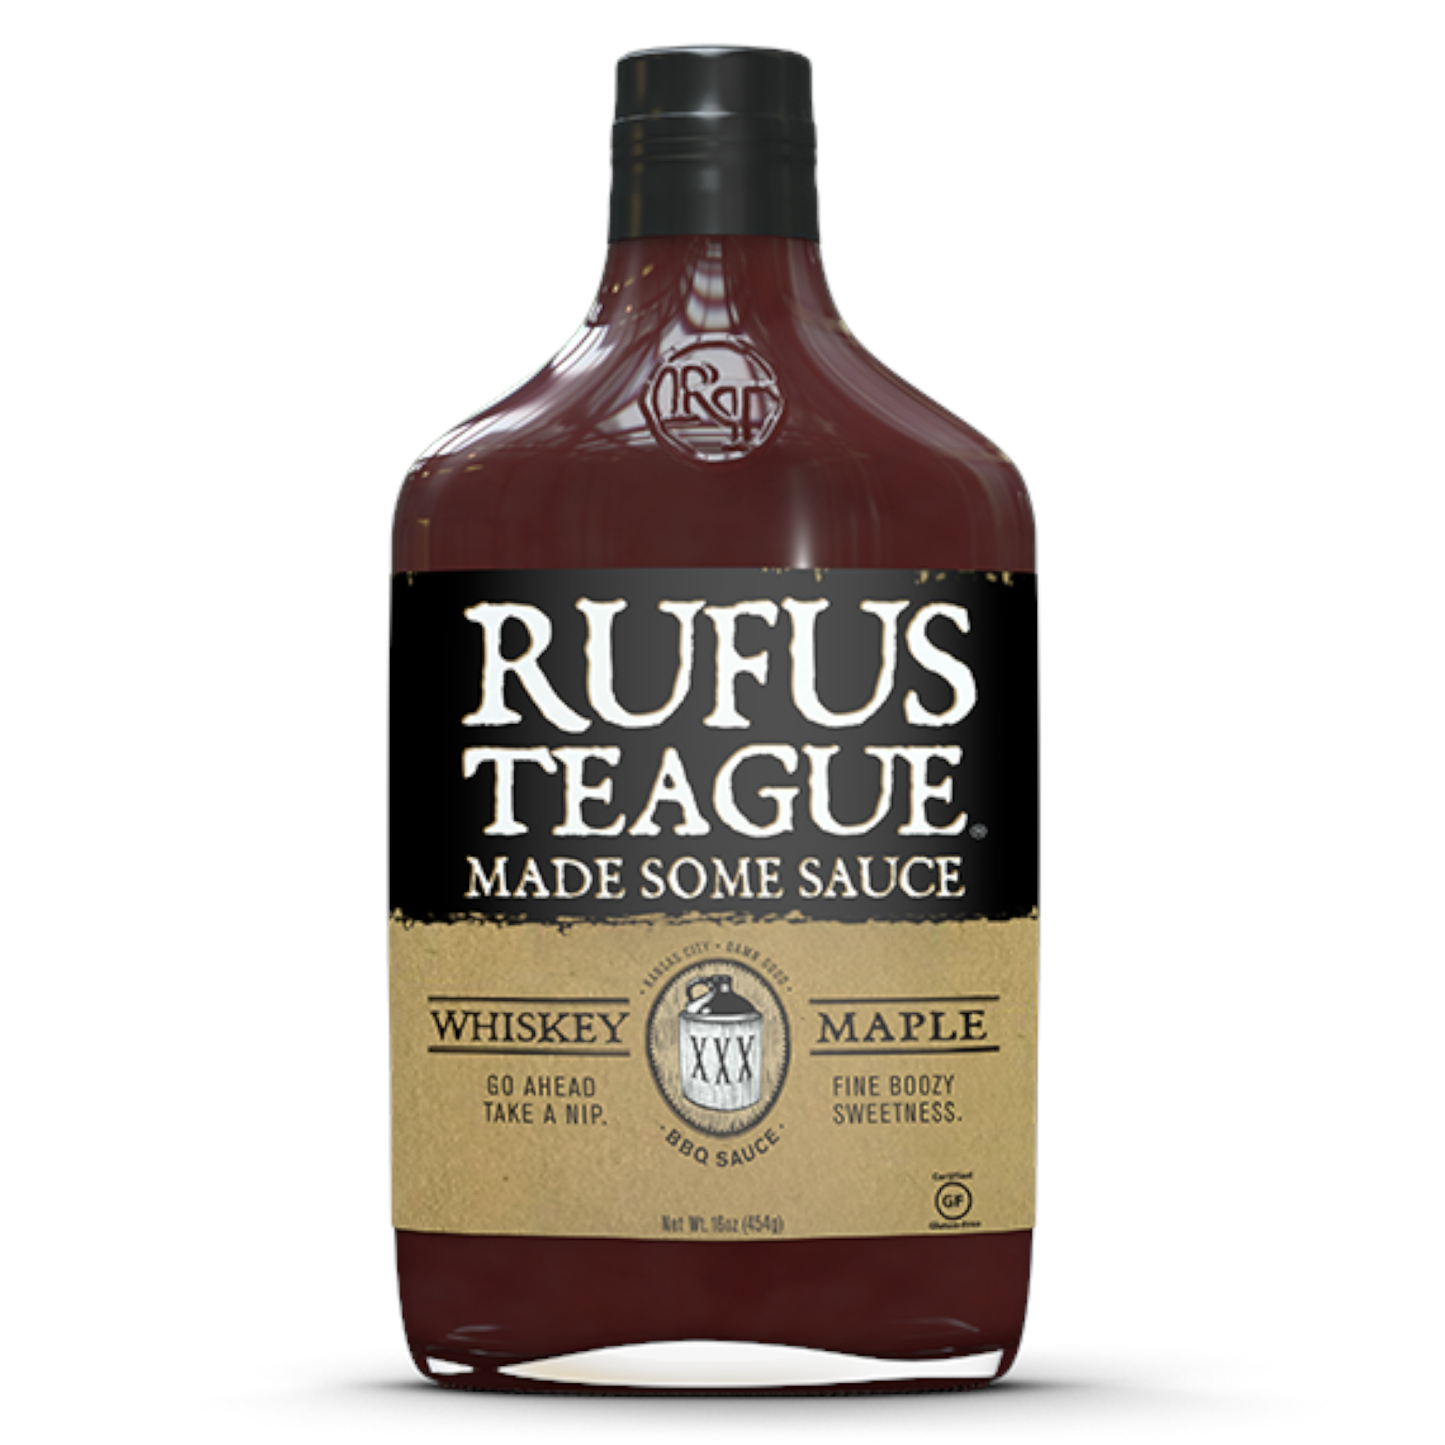 Rufus Teague Whiskey Maple